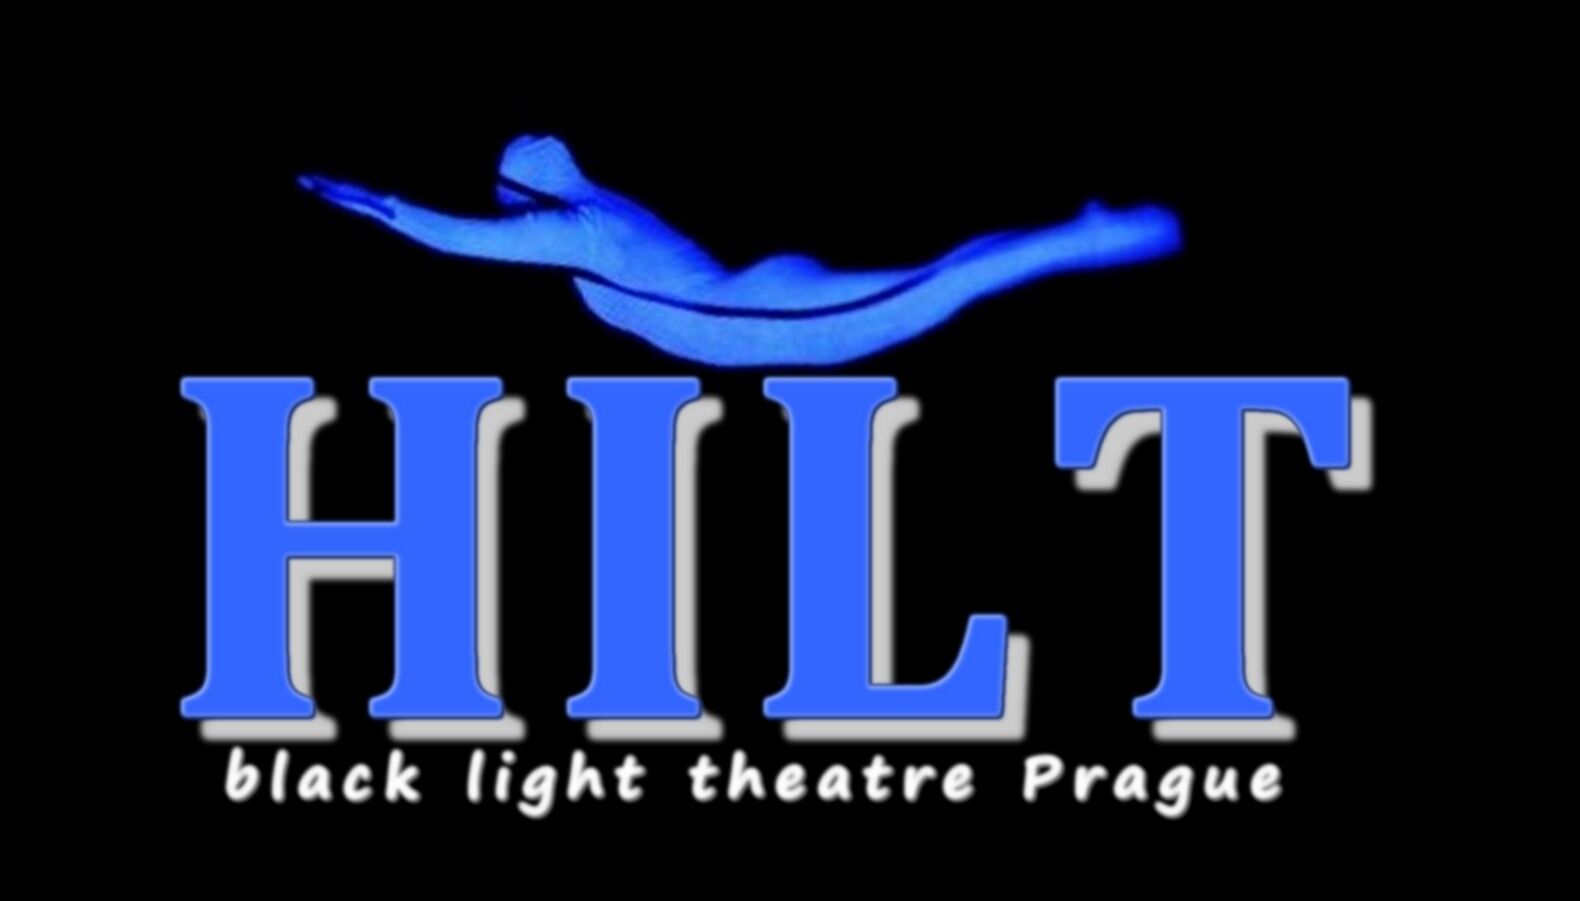 HILT black light theatre logo